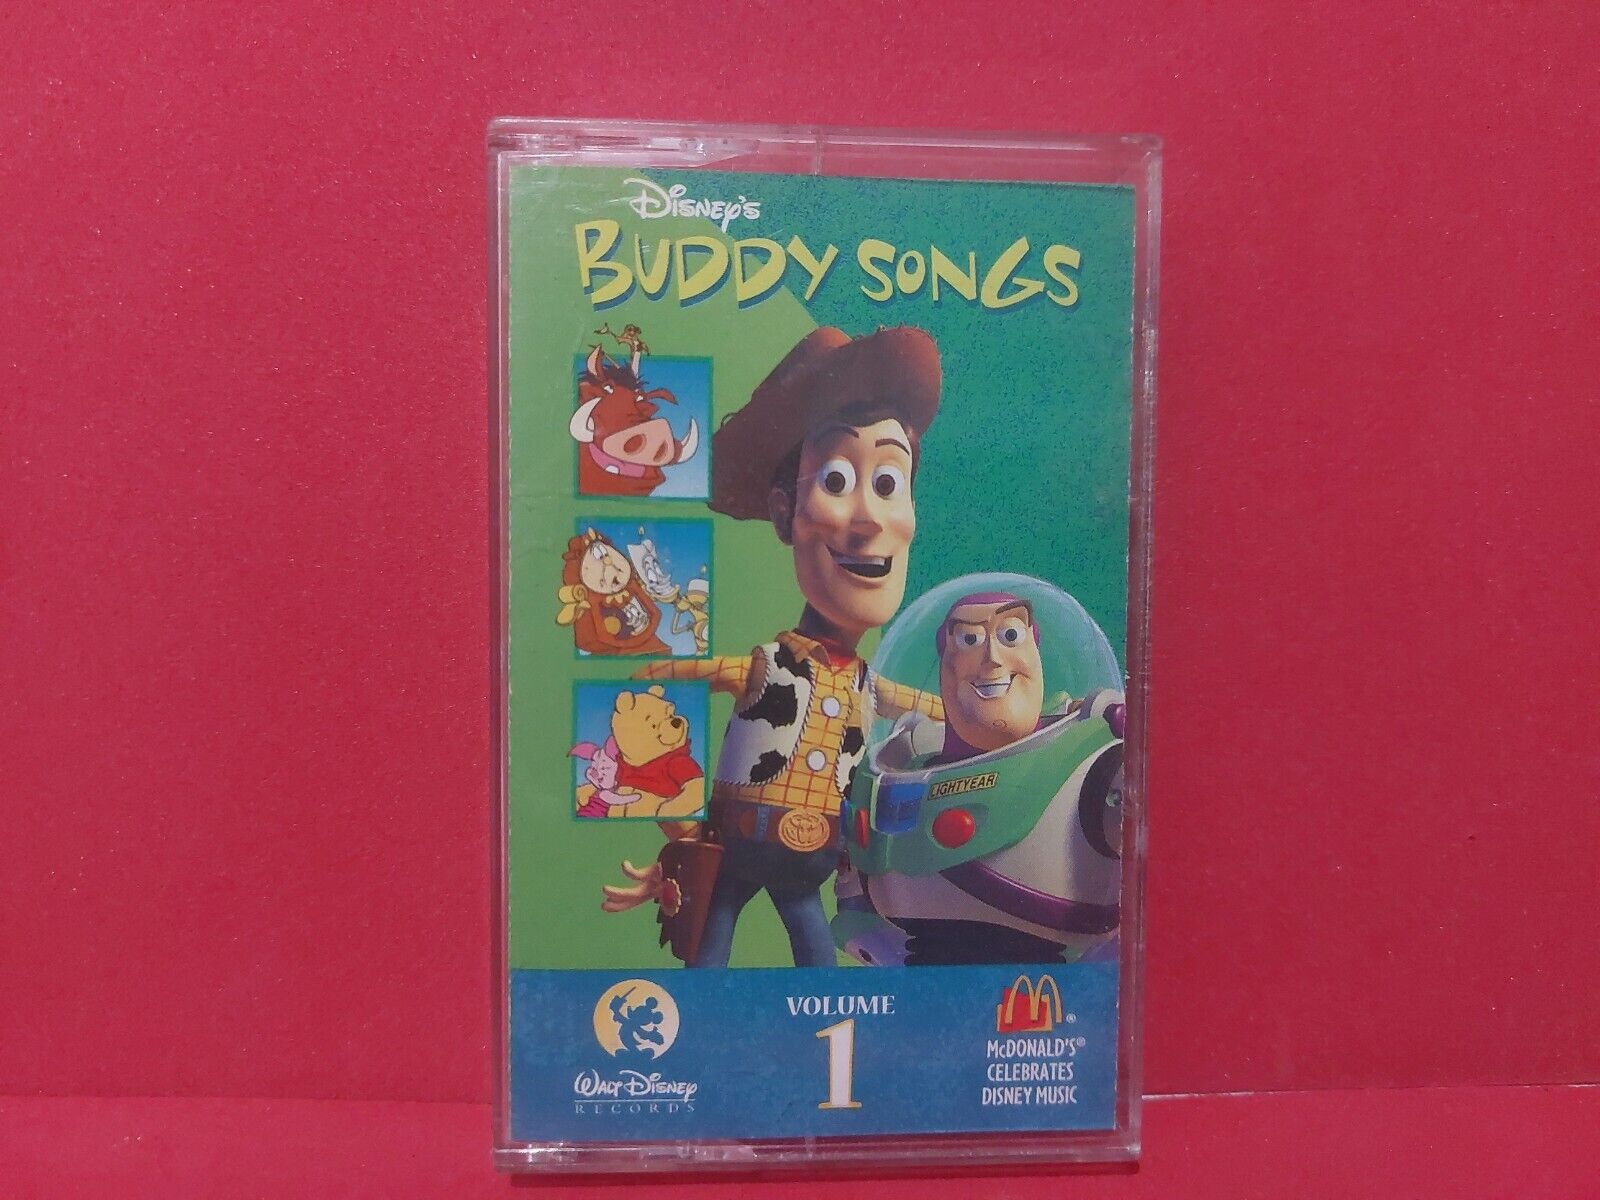 Disney’s Buddy Songs Cassette Volume 1 McDonald's celebrates Disney Music 